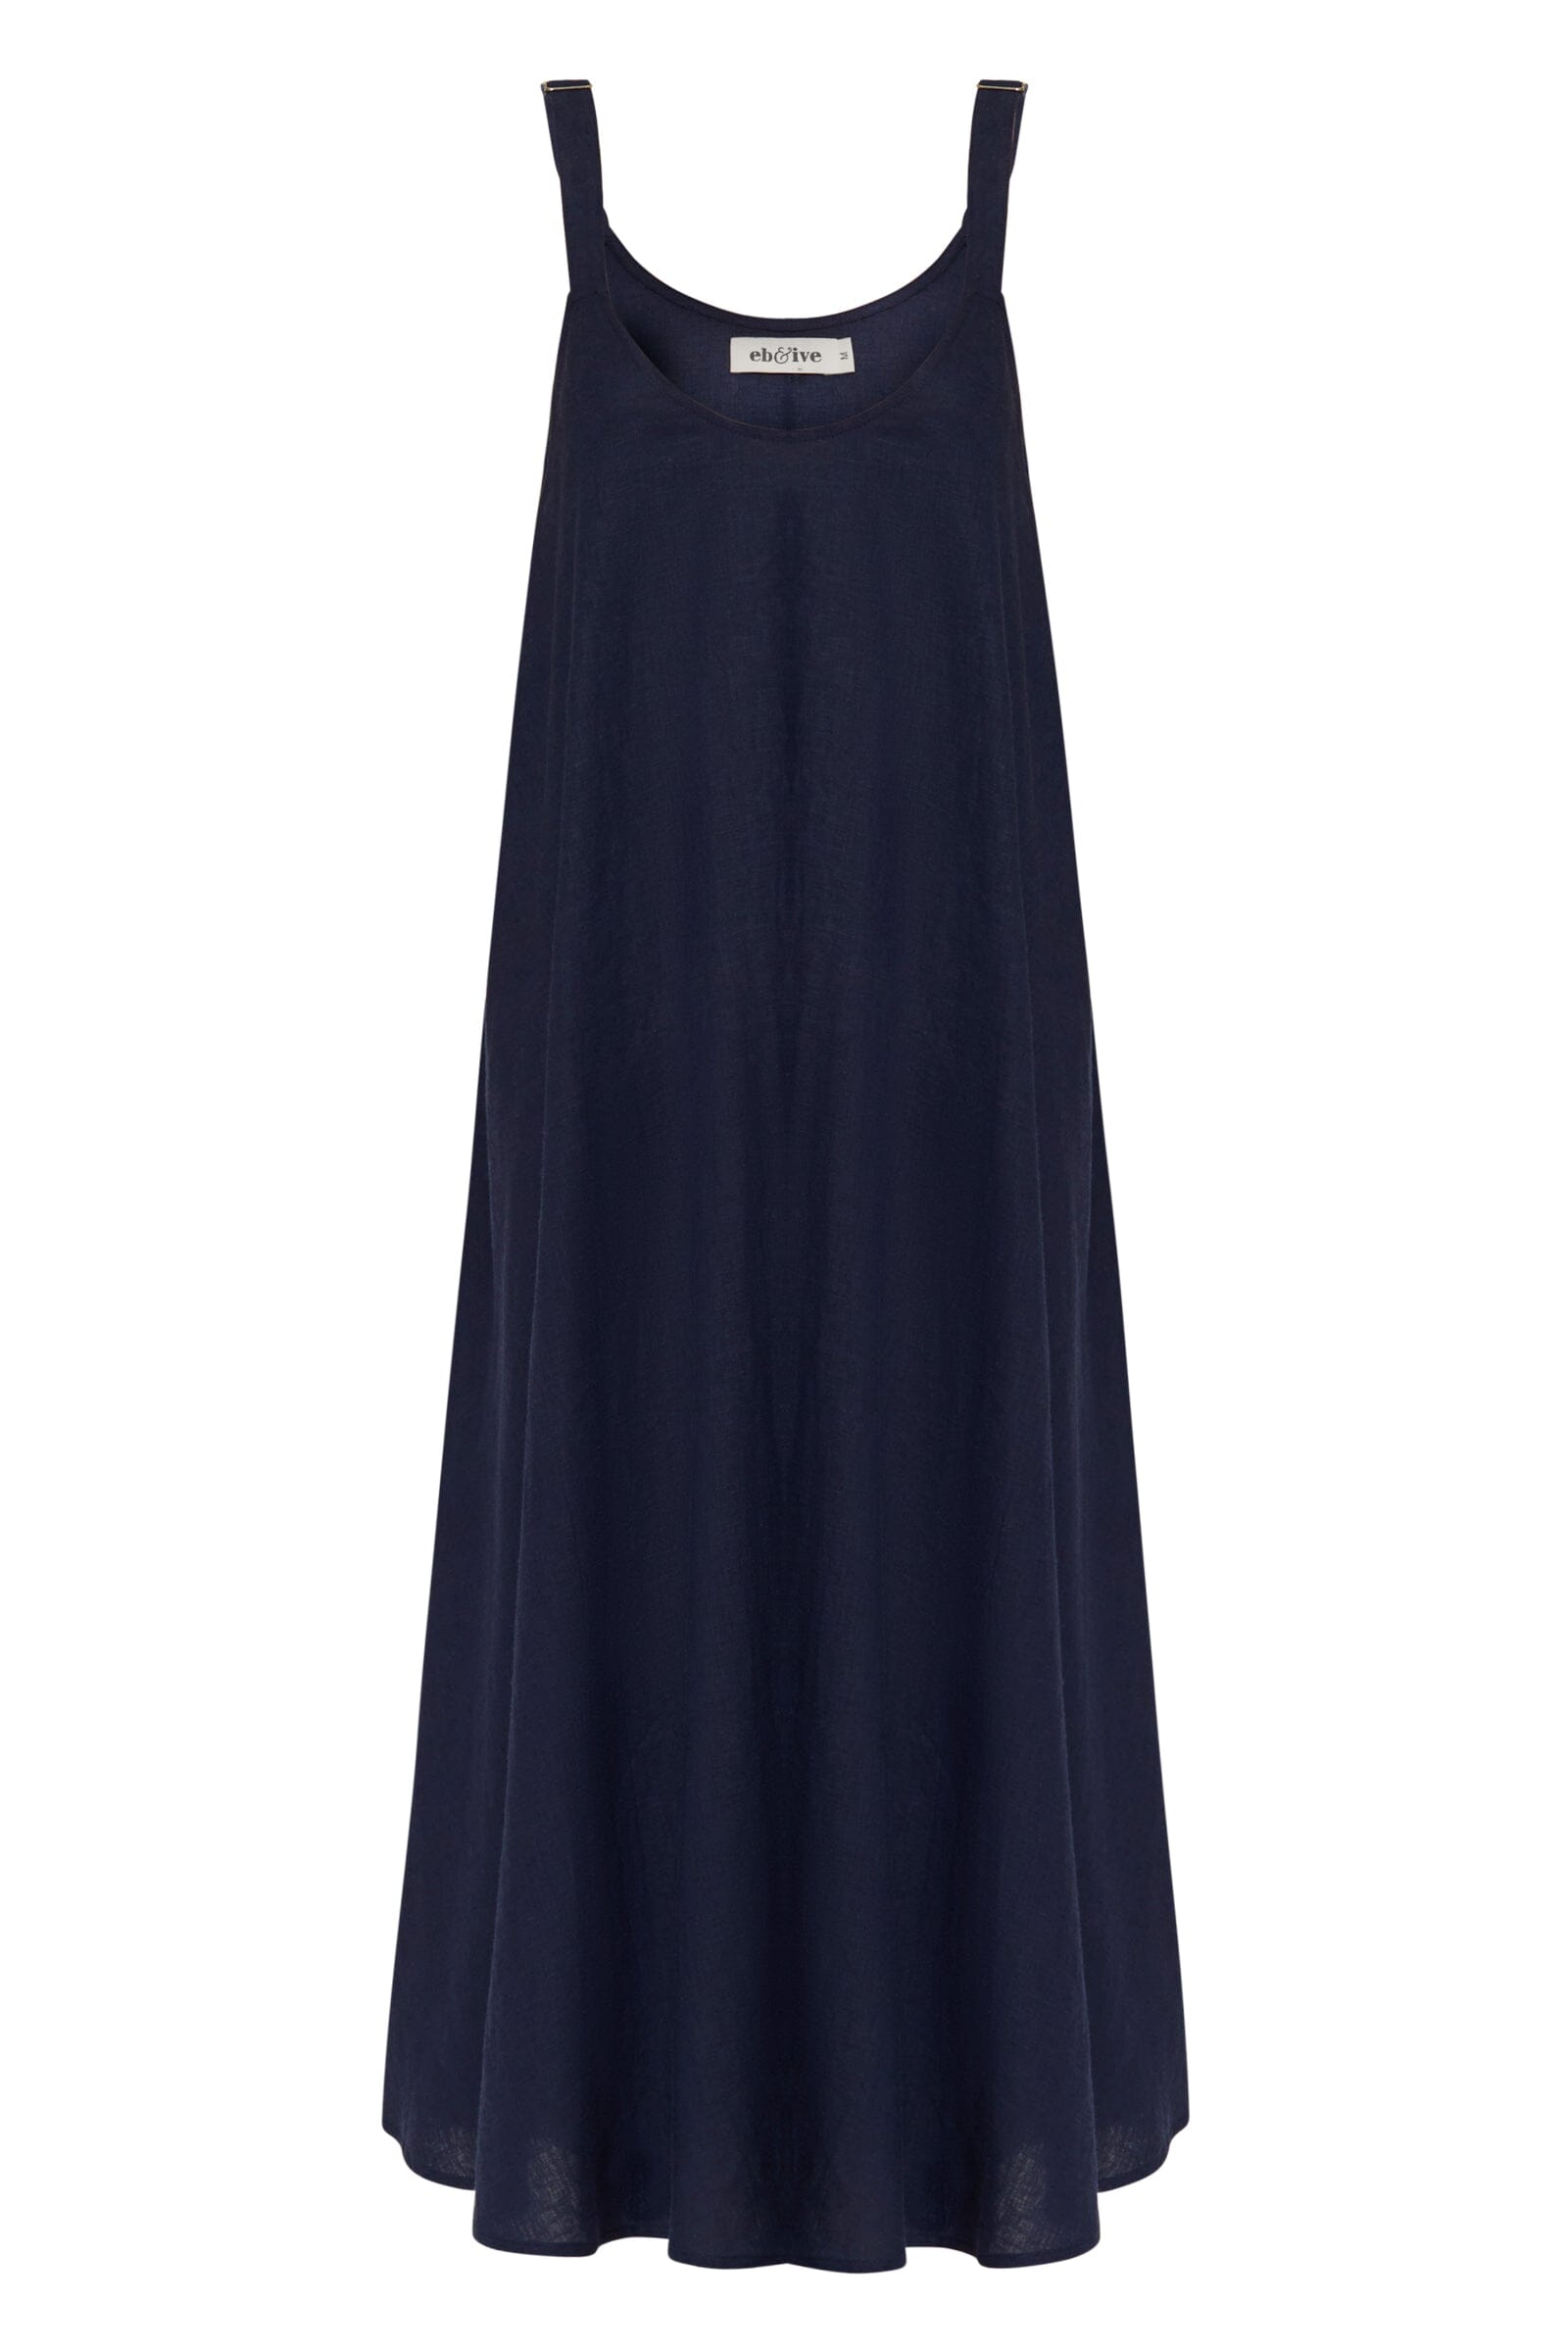 eb&ive - Verve Tank Maxi Dress - Sapphire Womens eb&ive